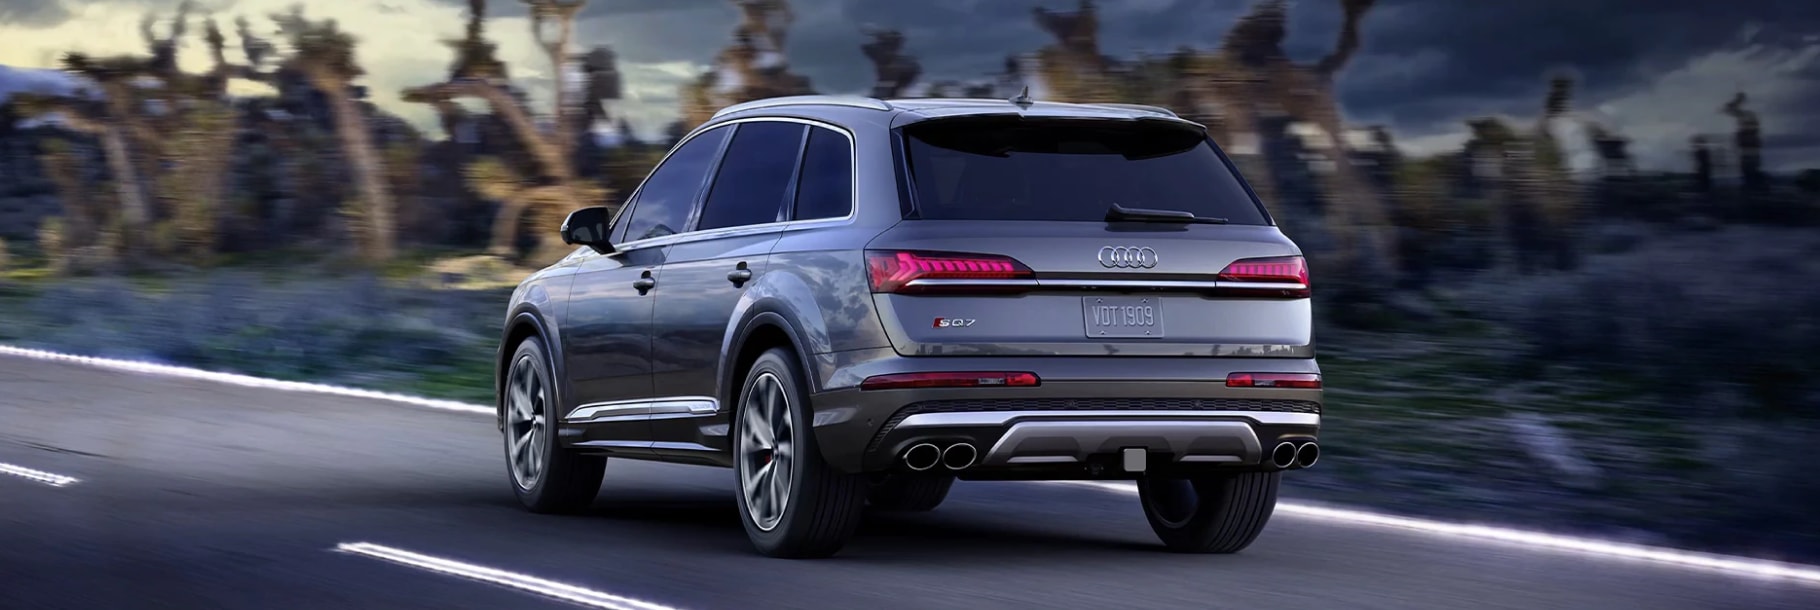 Audi-Q5-gray